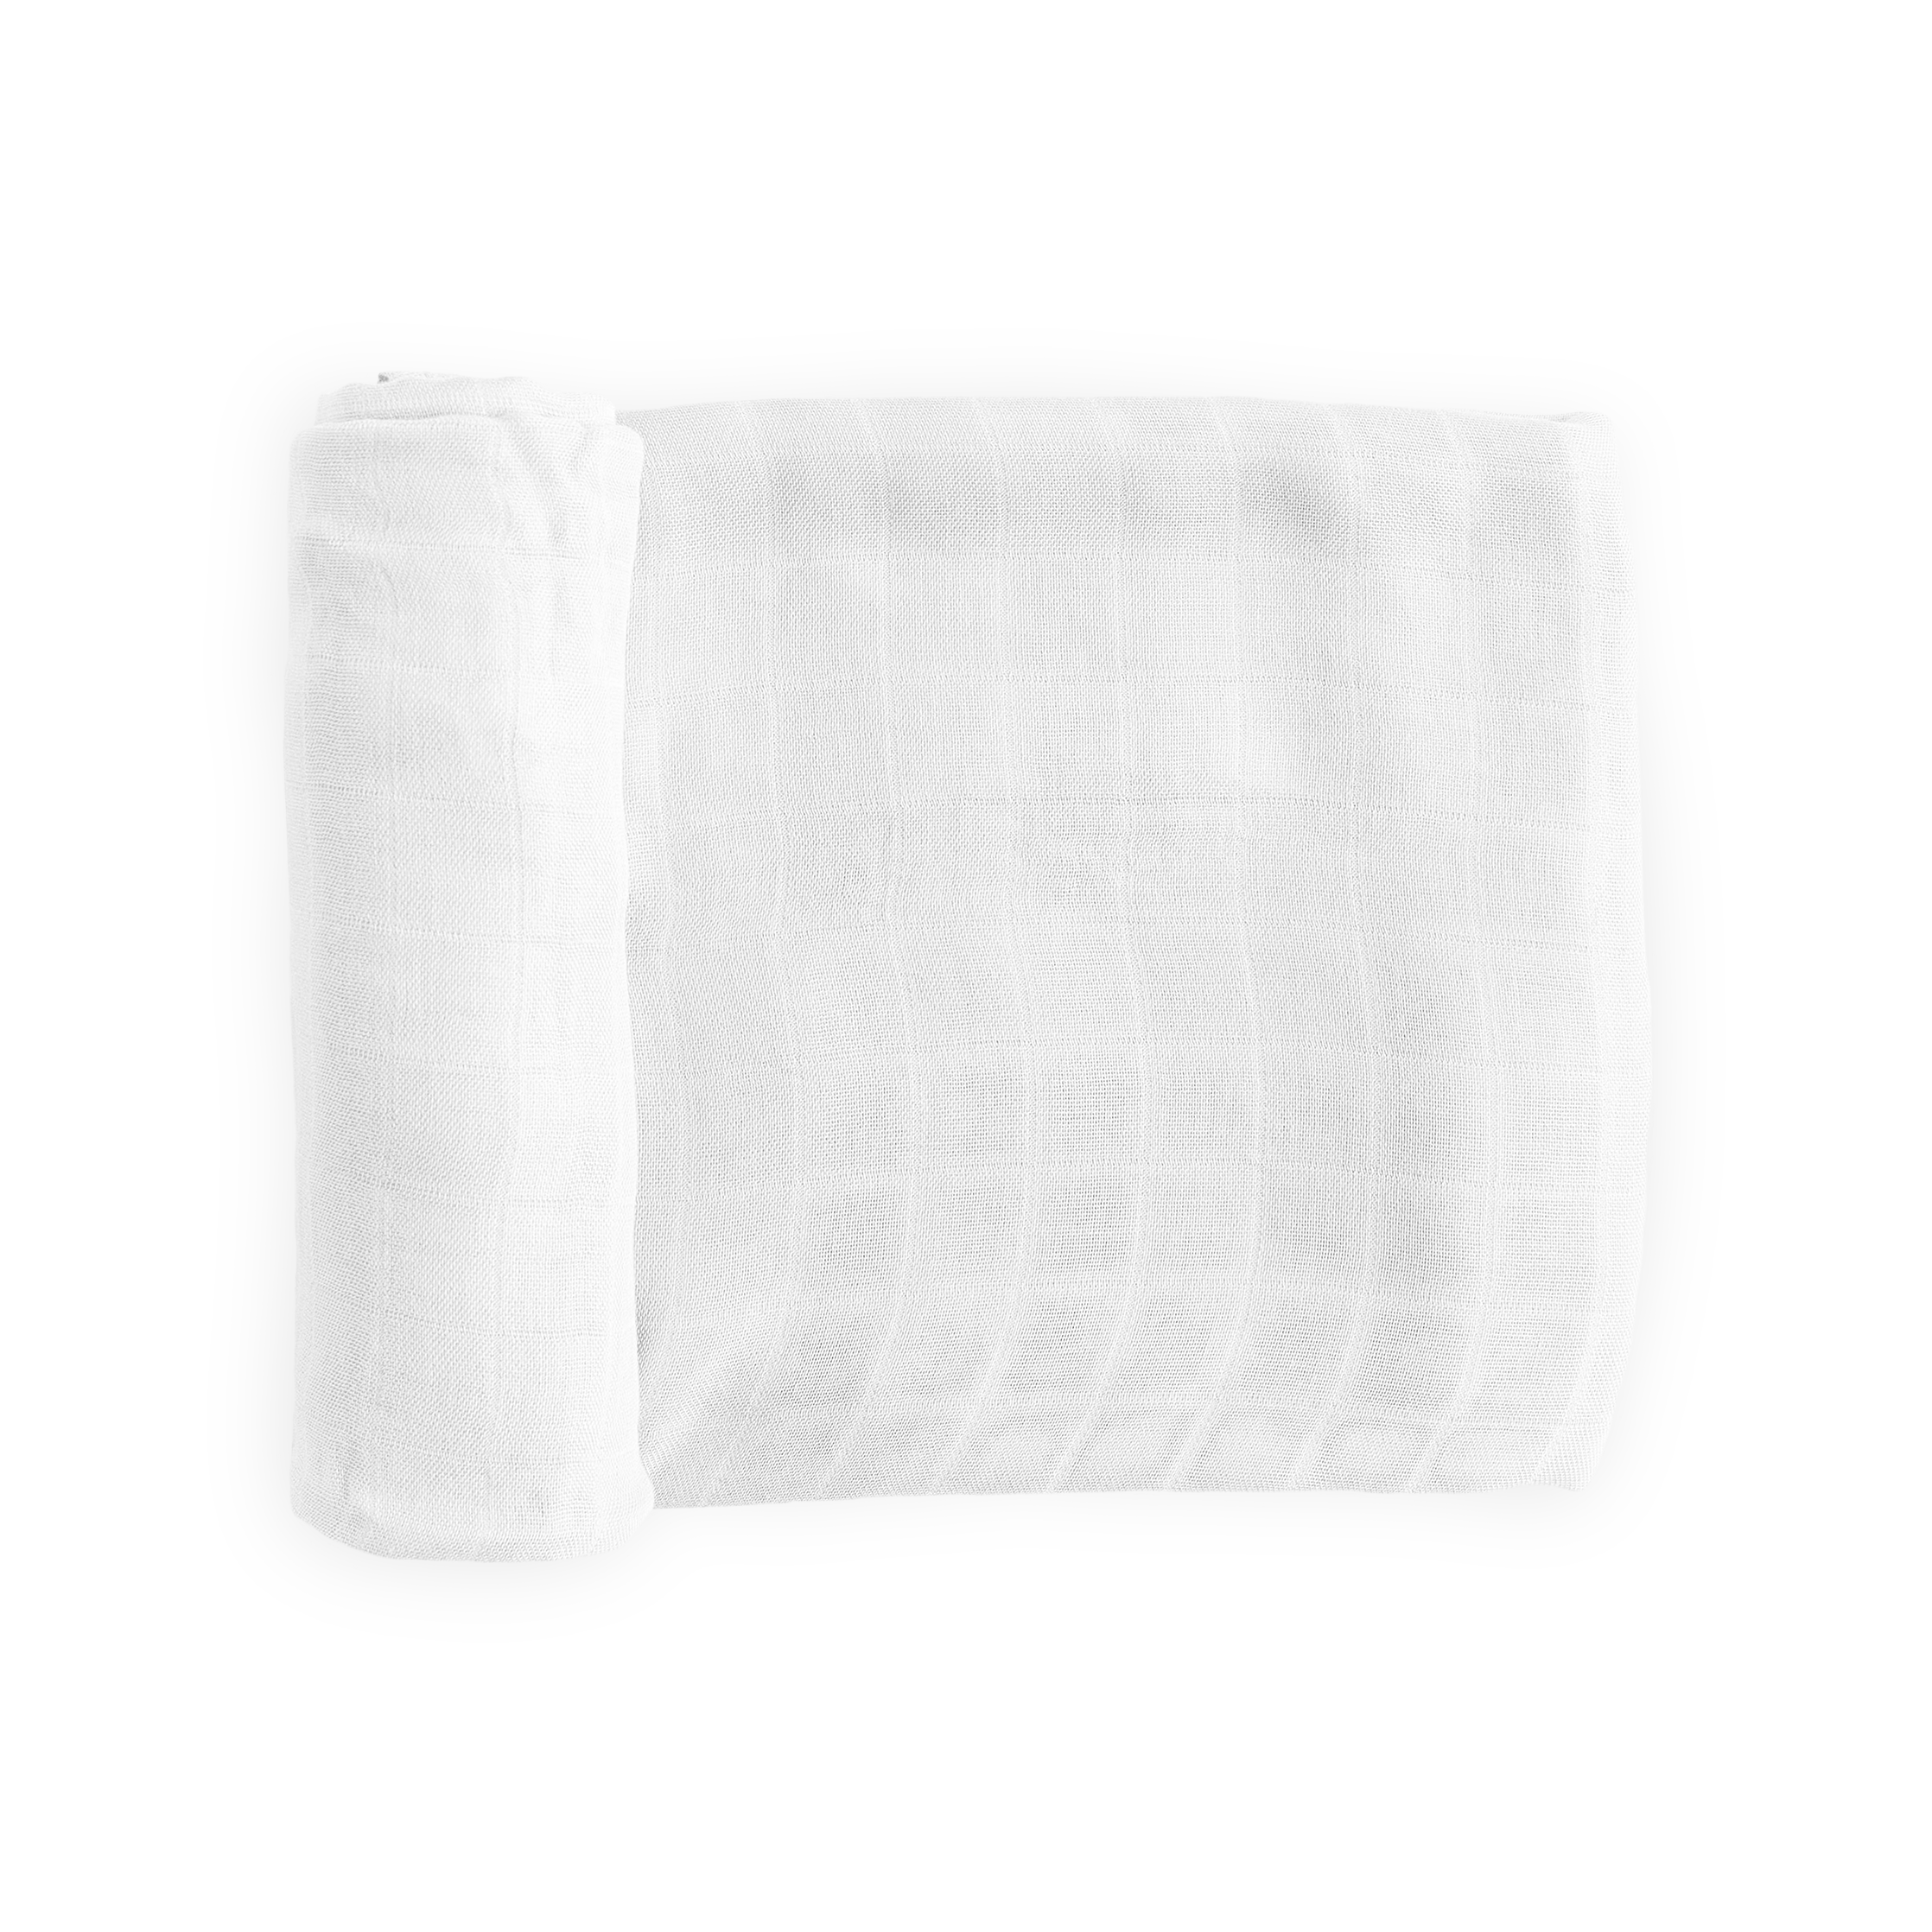 Deluxe Muslin Swaddle Blanket - Plain White